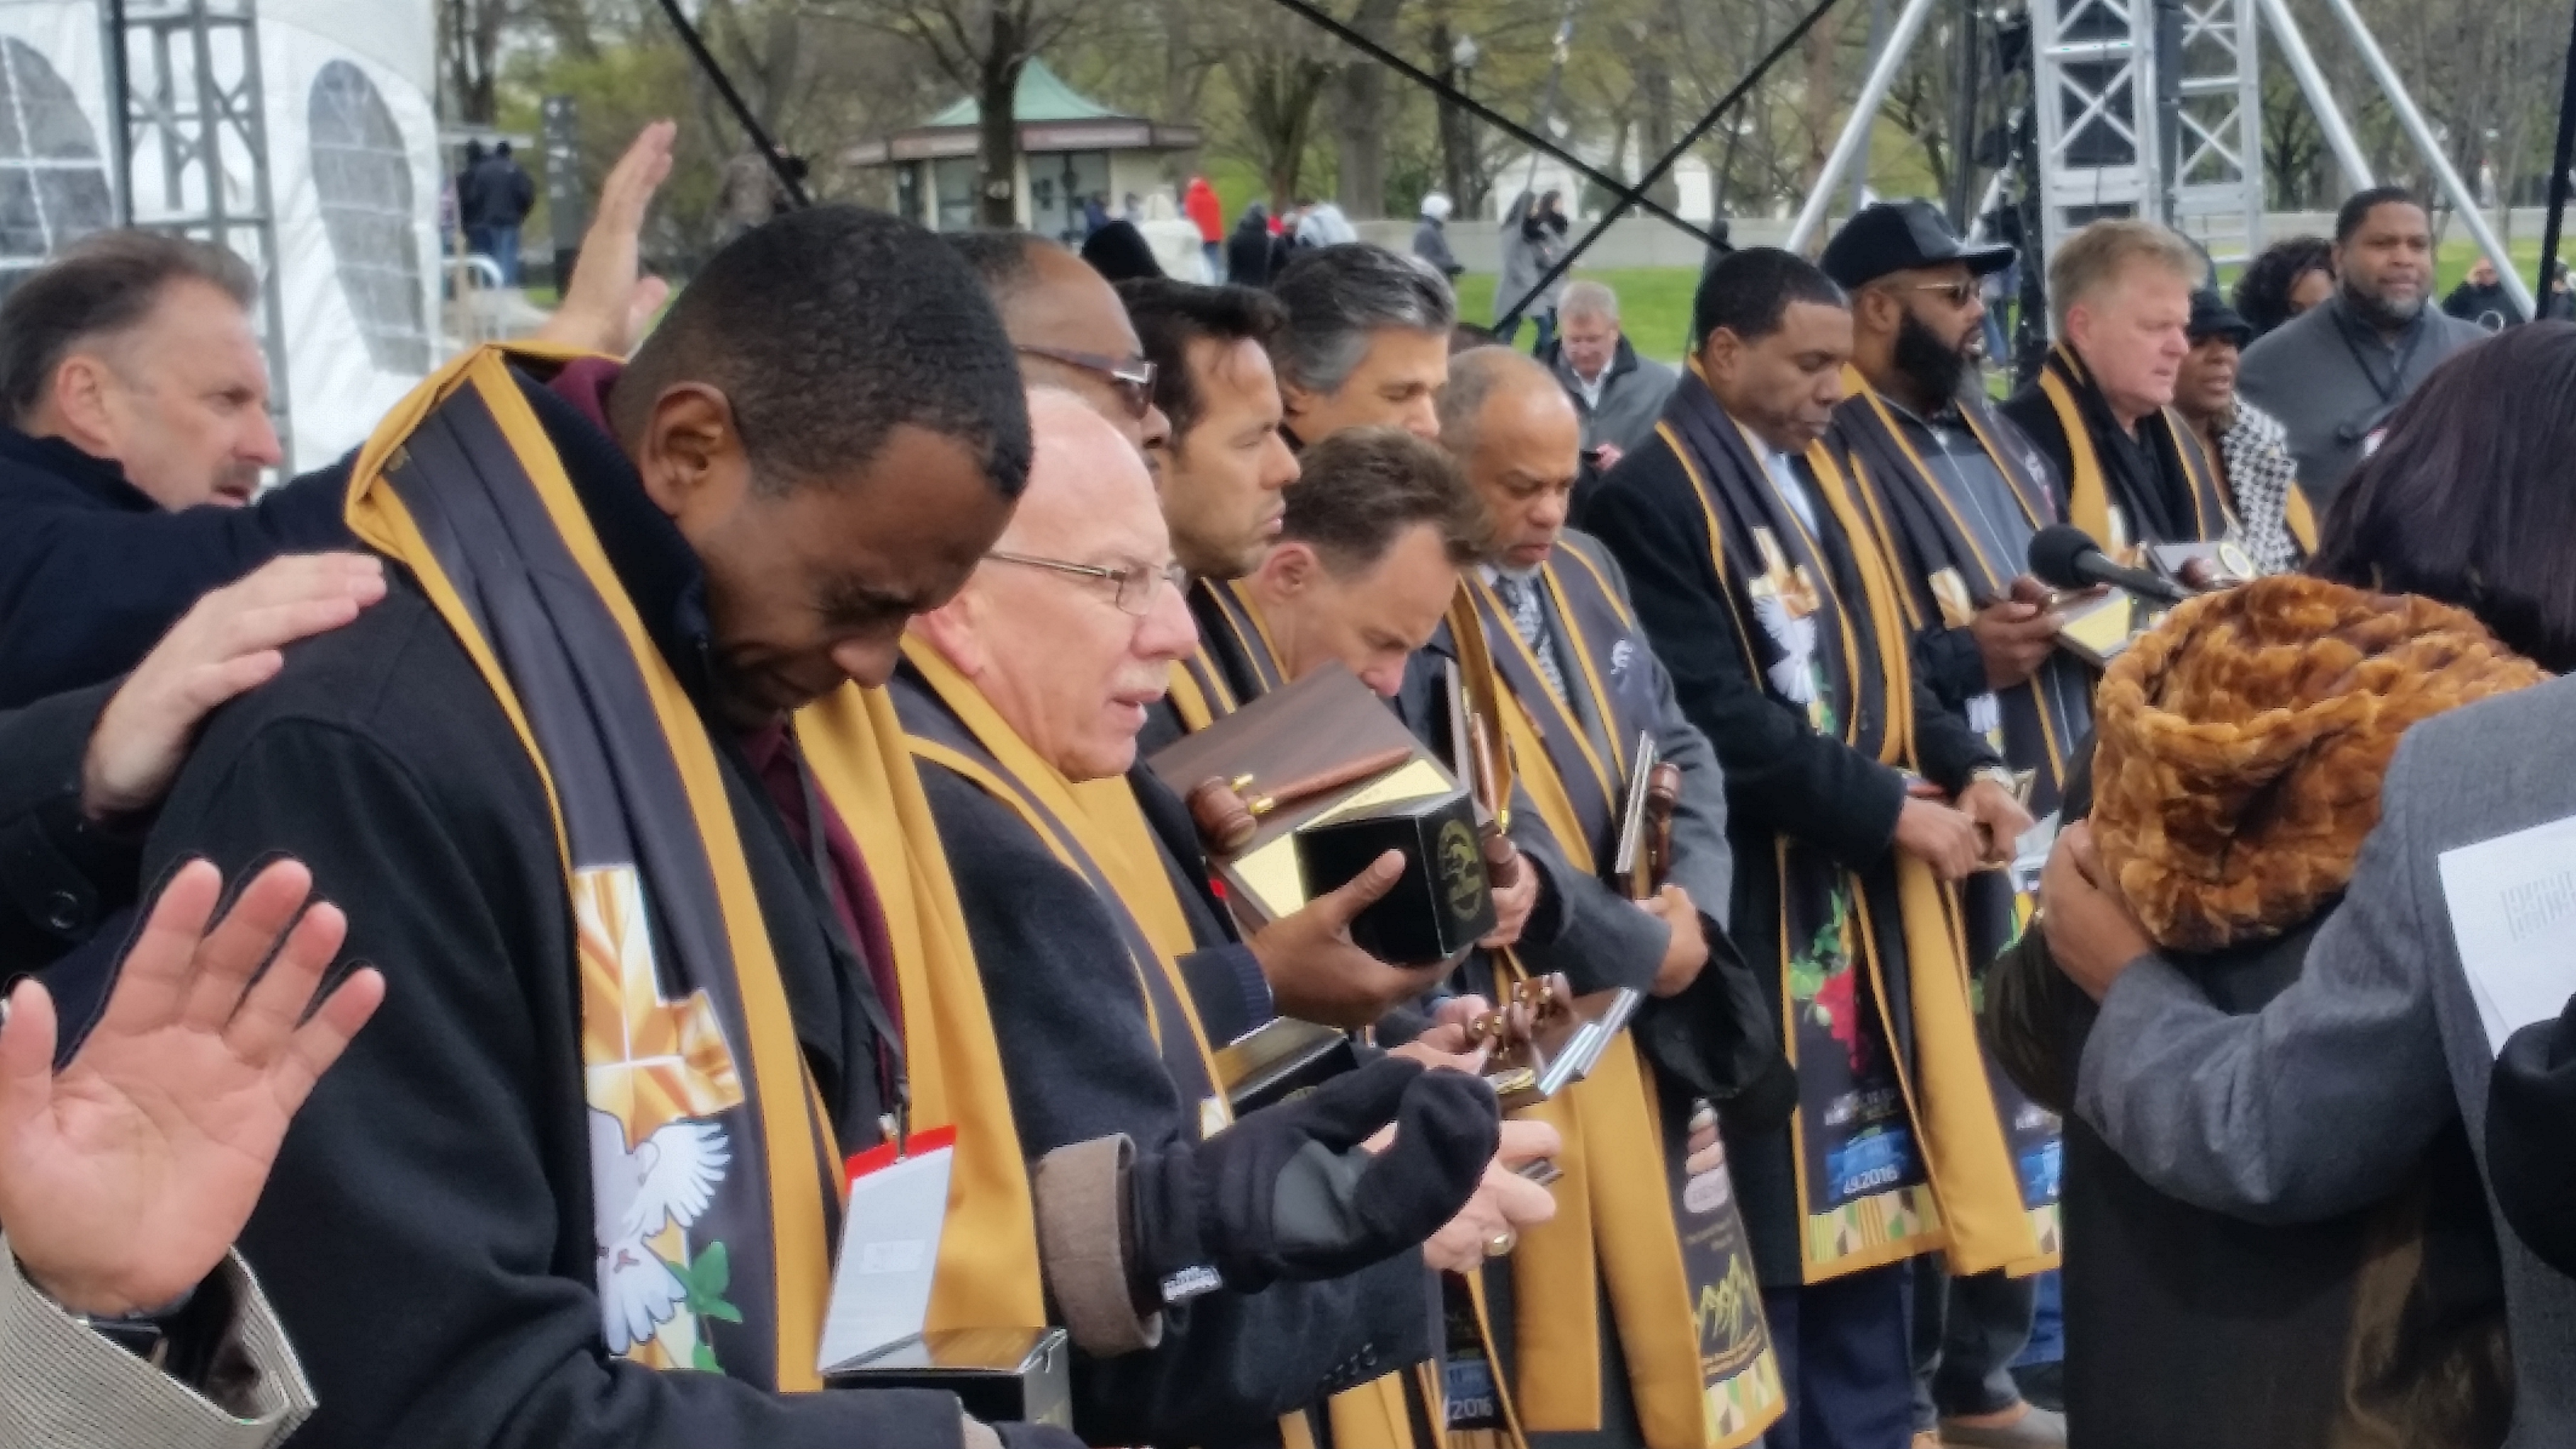 Honorees Receive Prayer